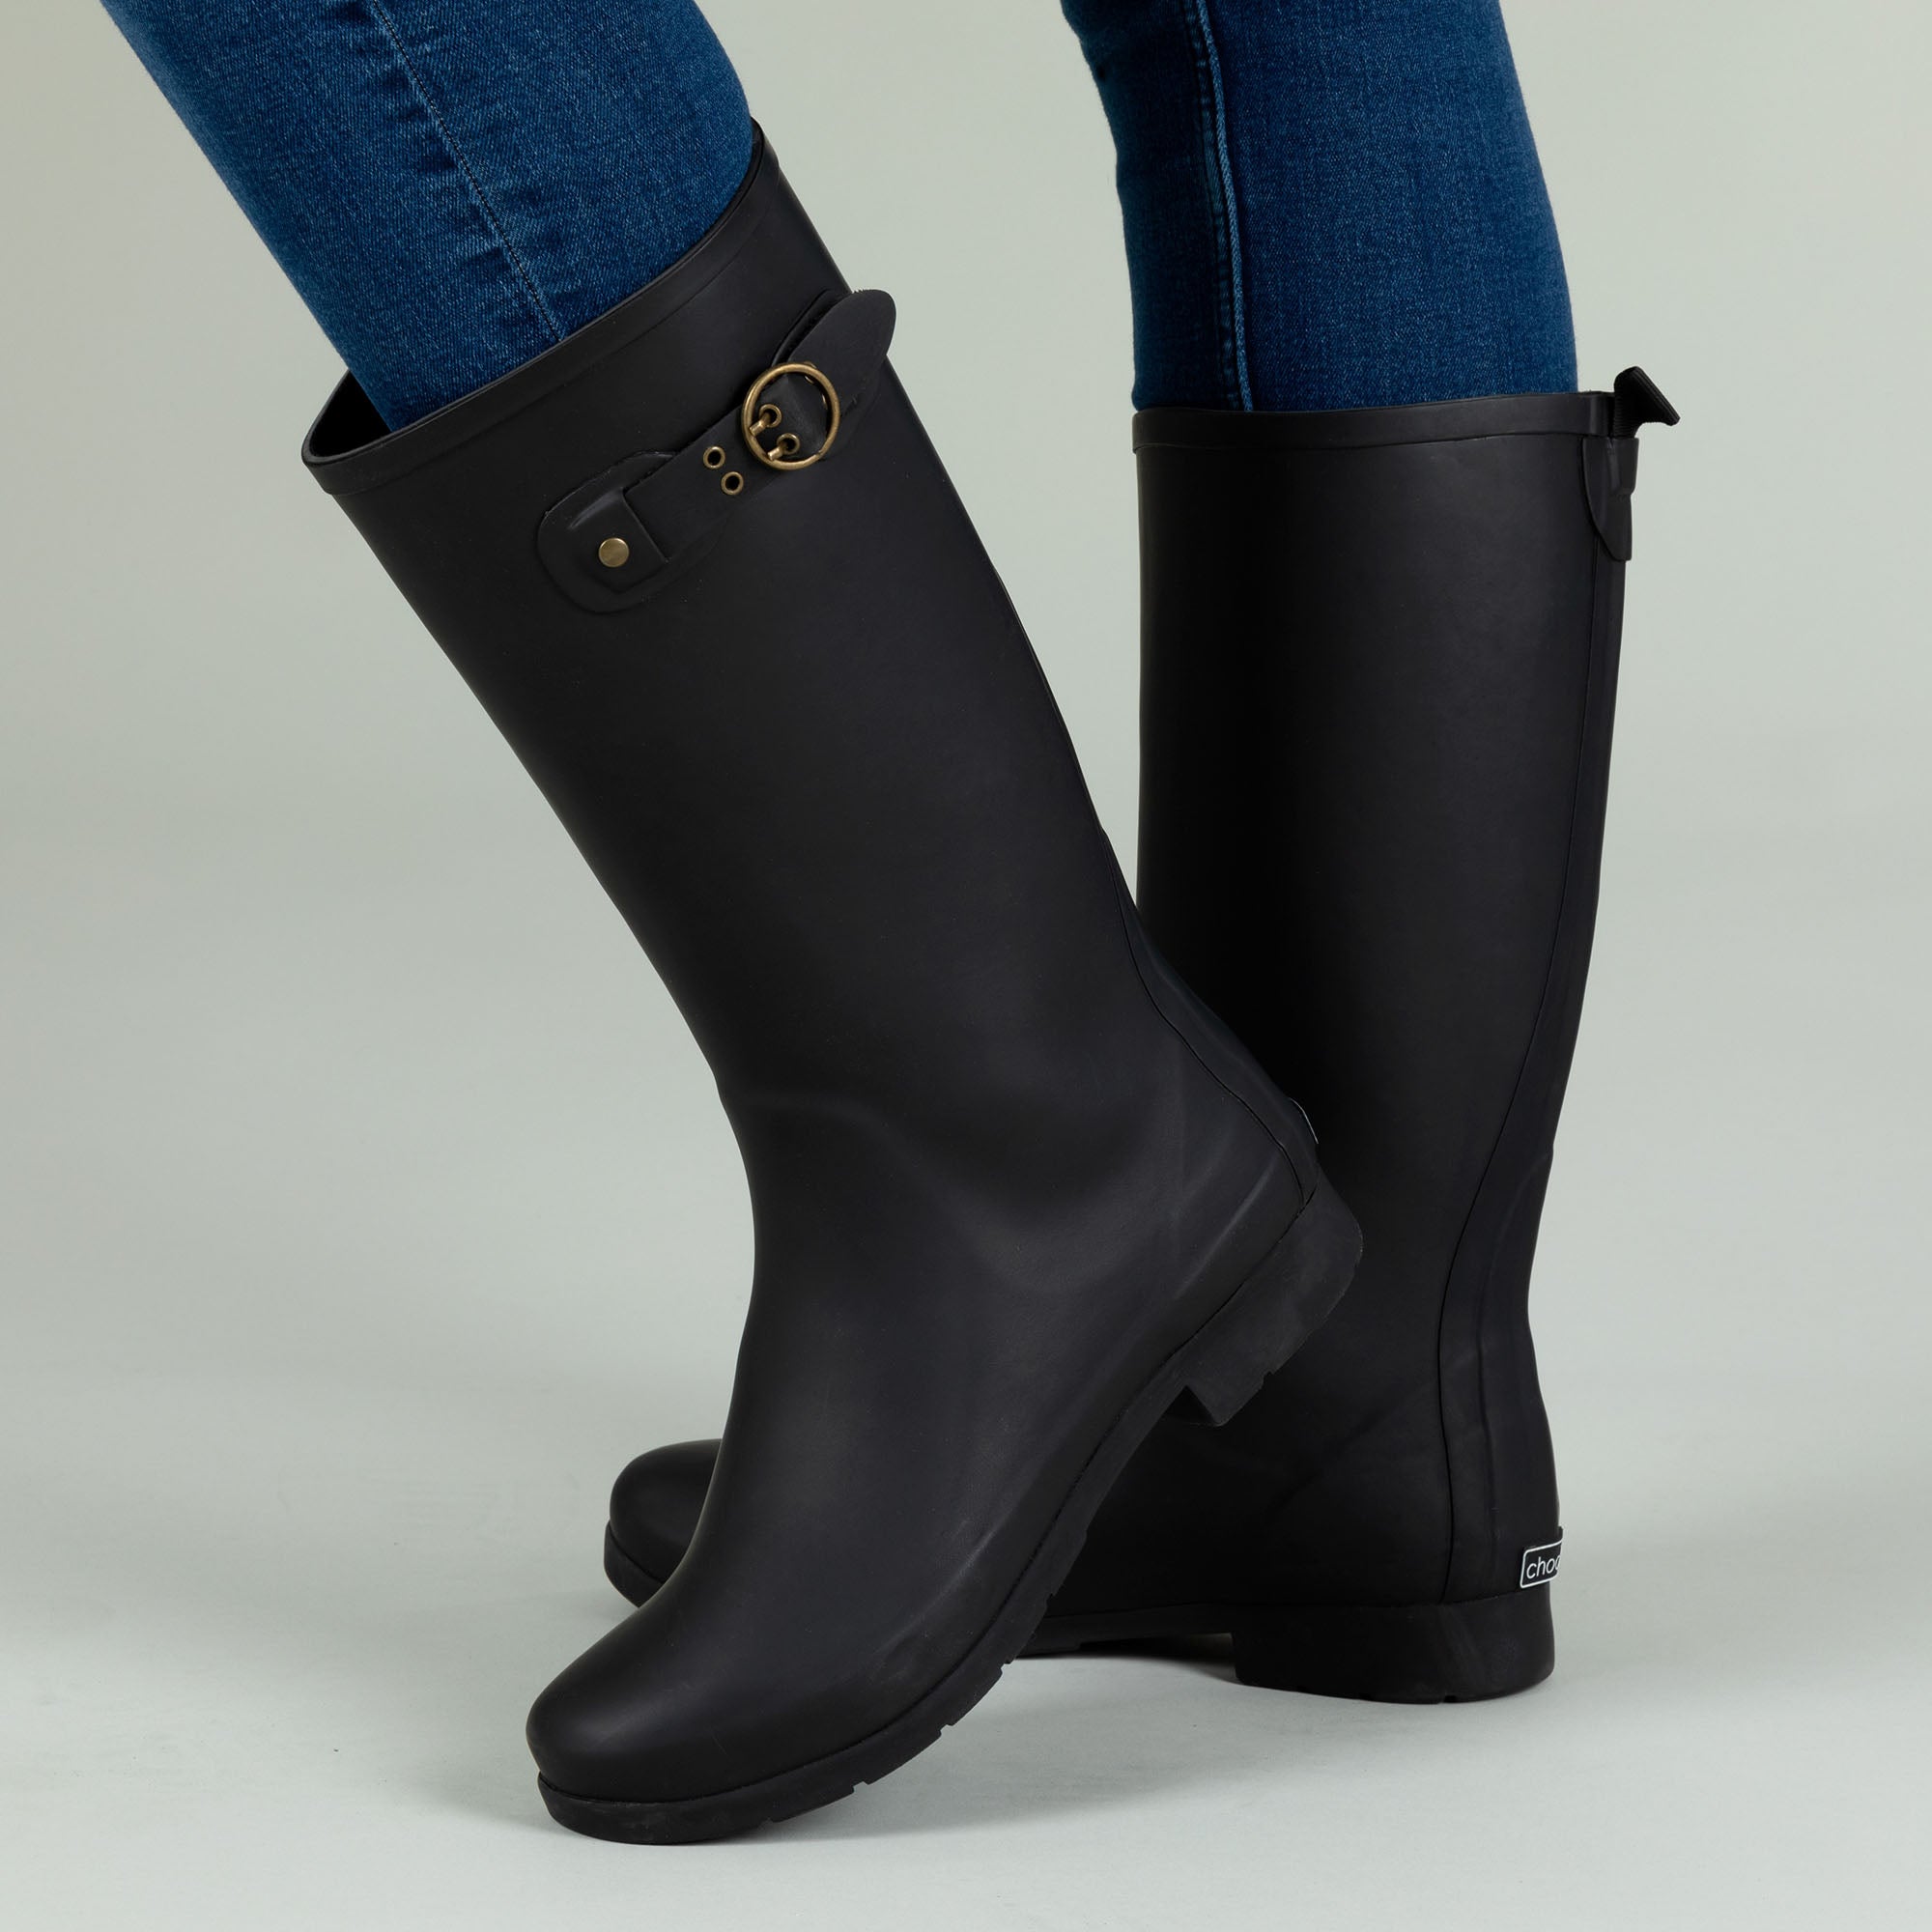 Eastlake Classic Tall Rain Boots - Black - 8